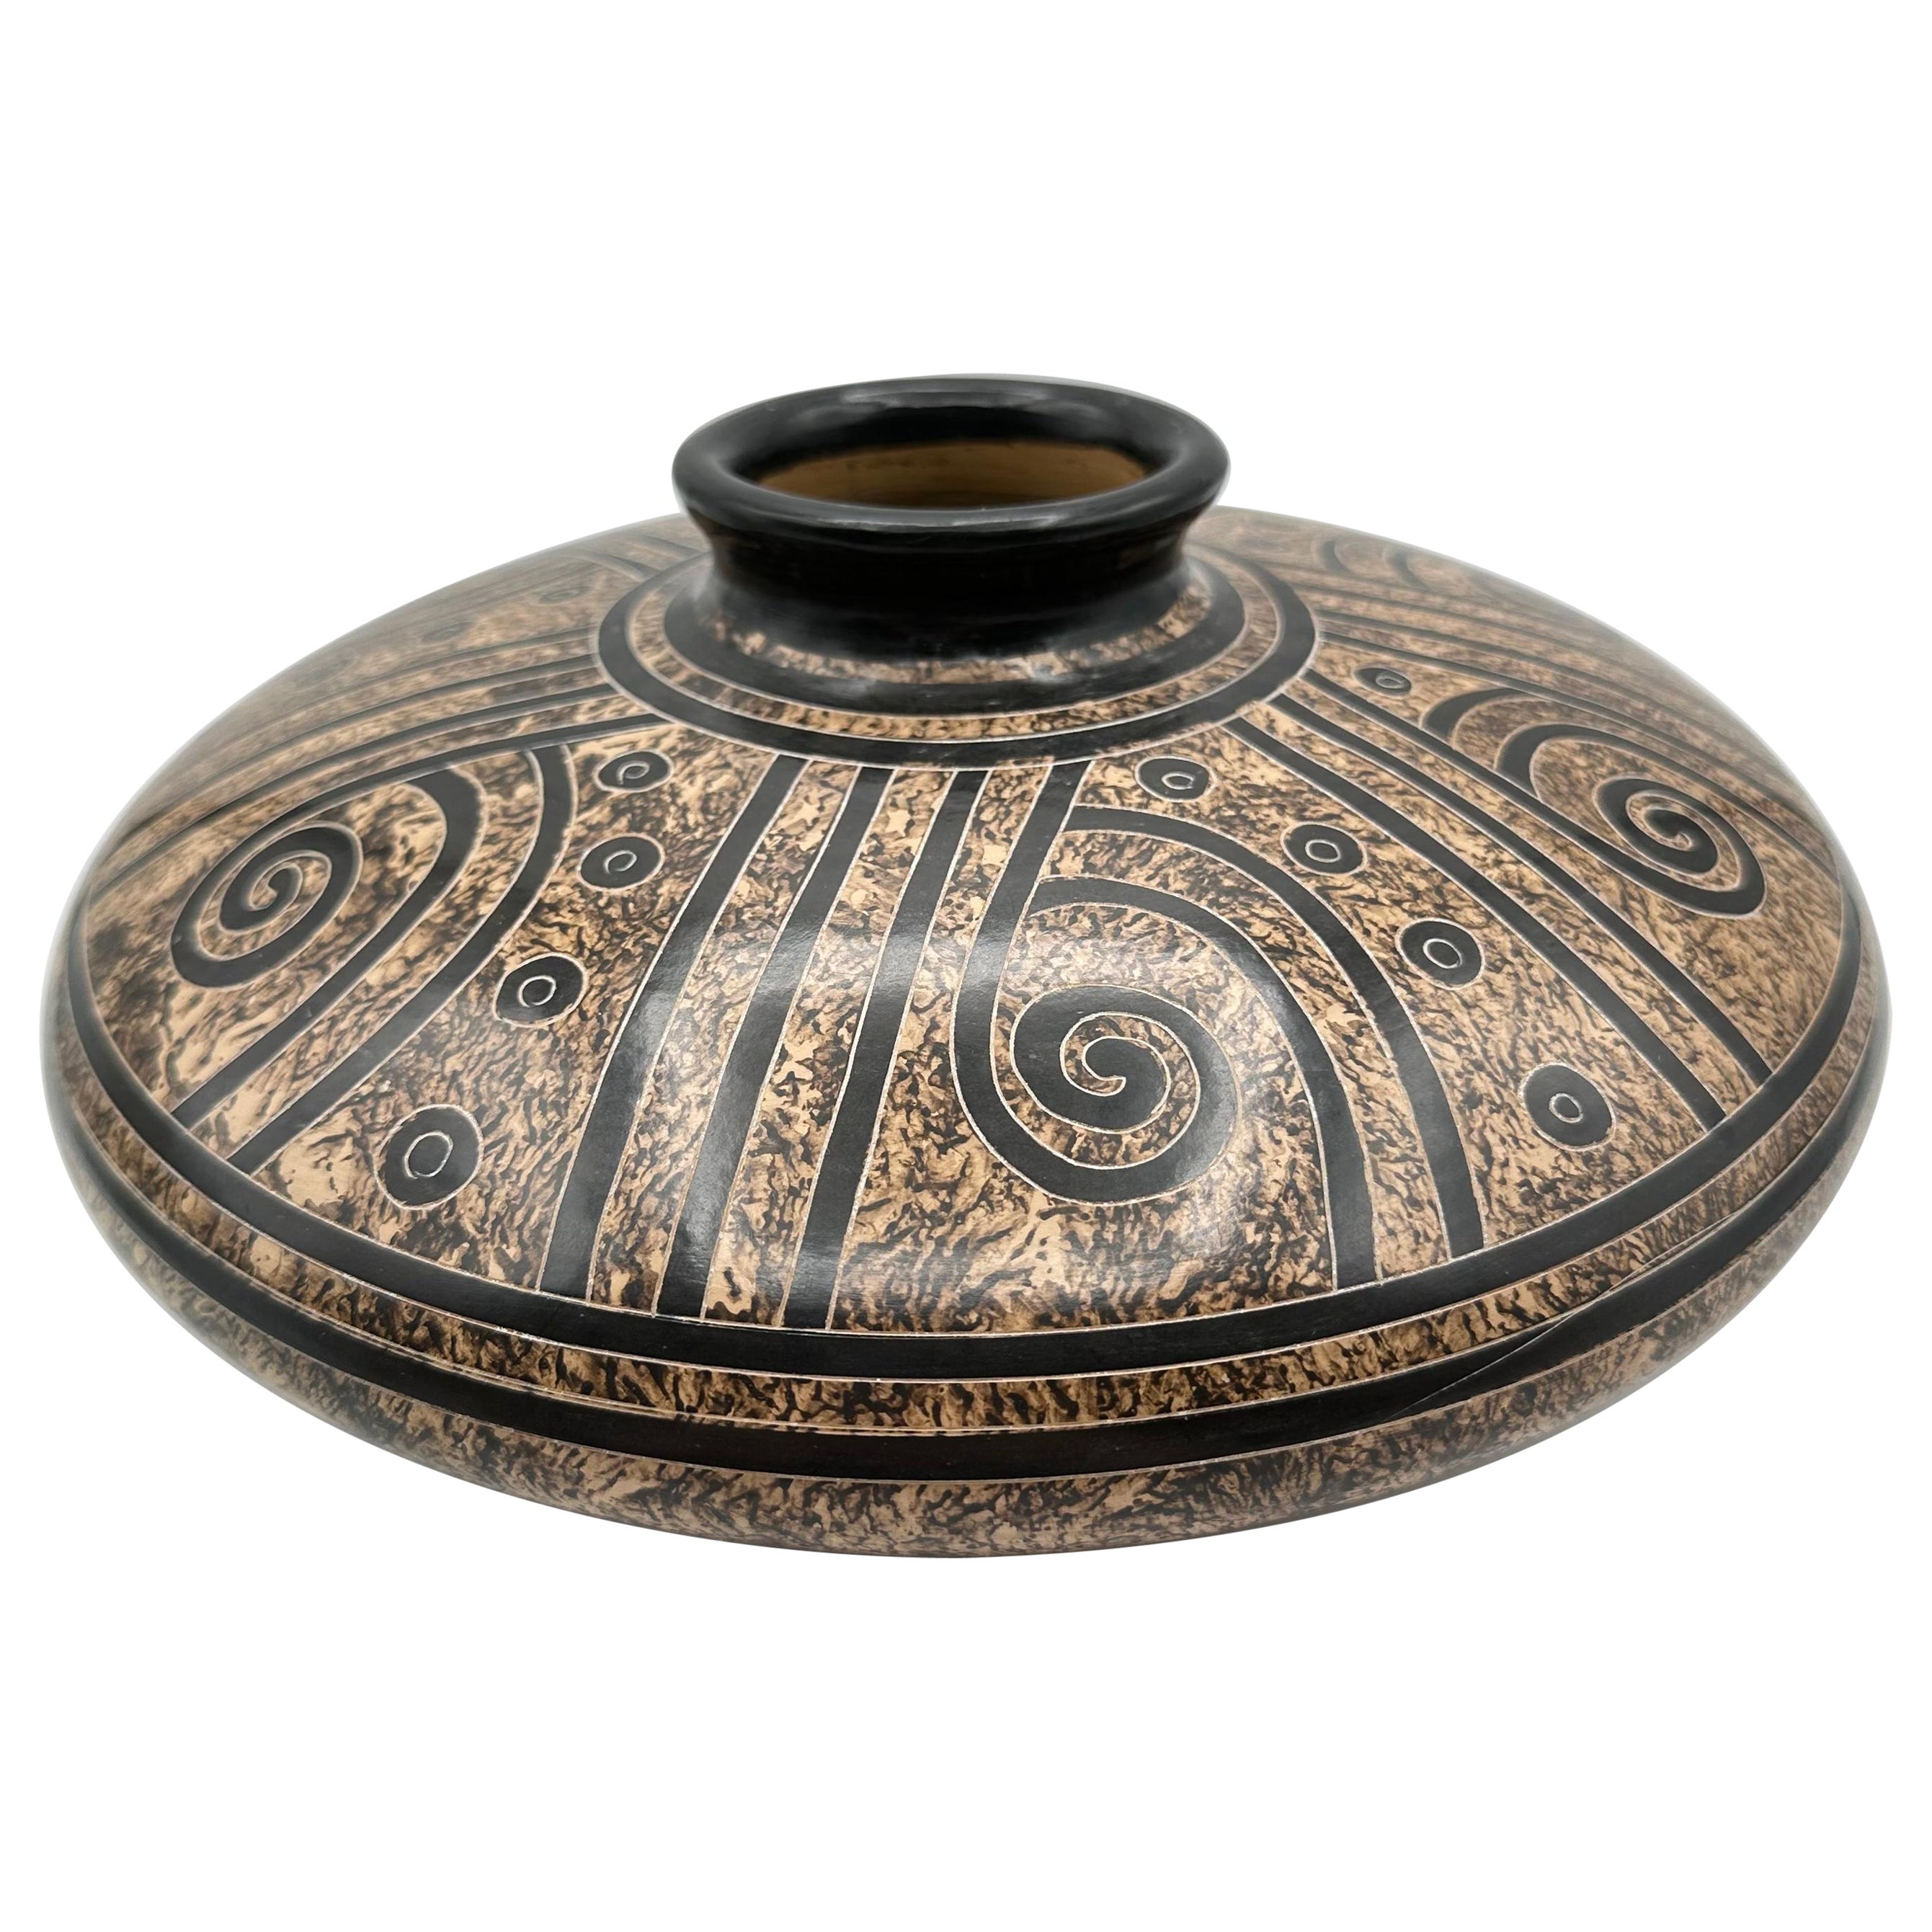 Handmade Nicaraguan Brown Ceramic Vase with Geometric Spiral Designs, Signed